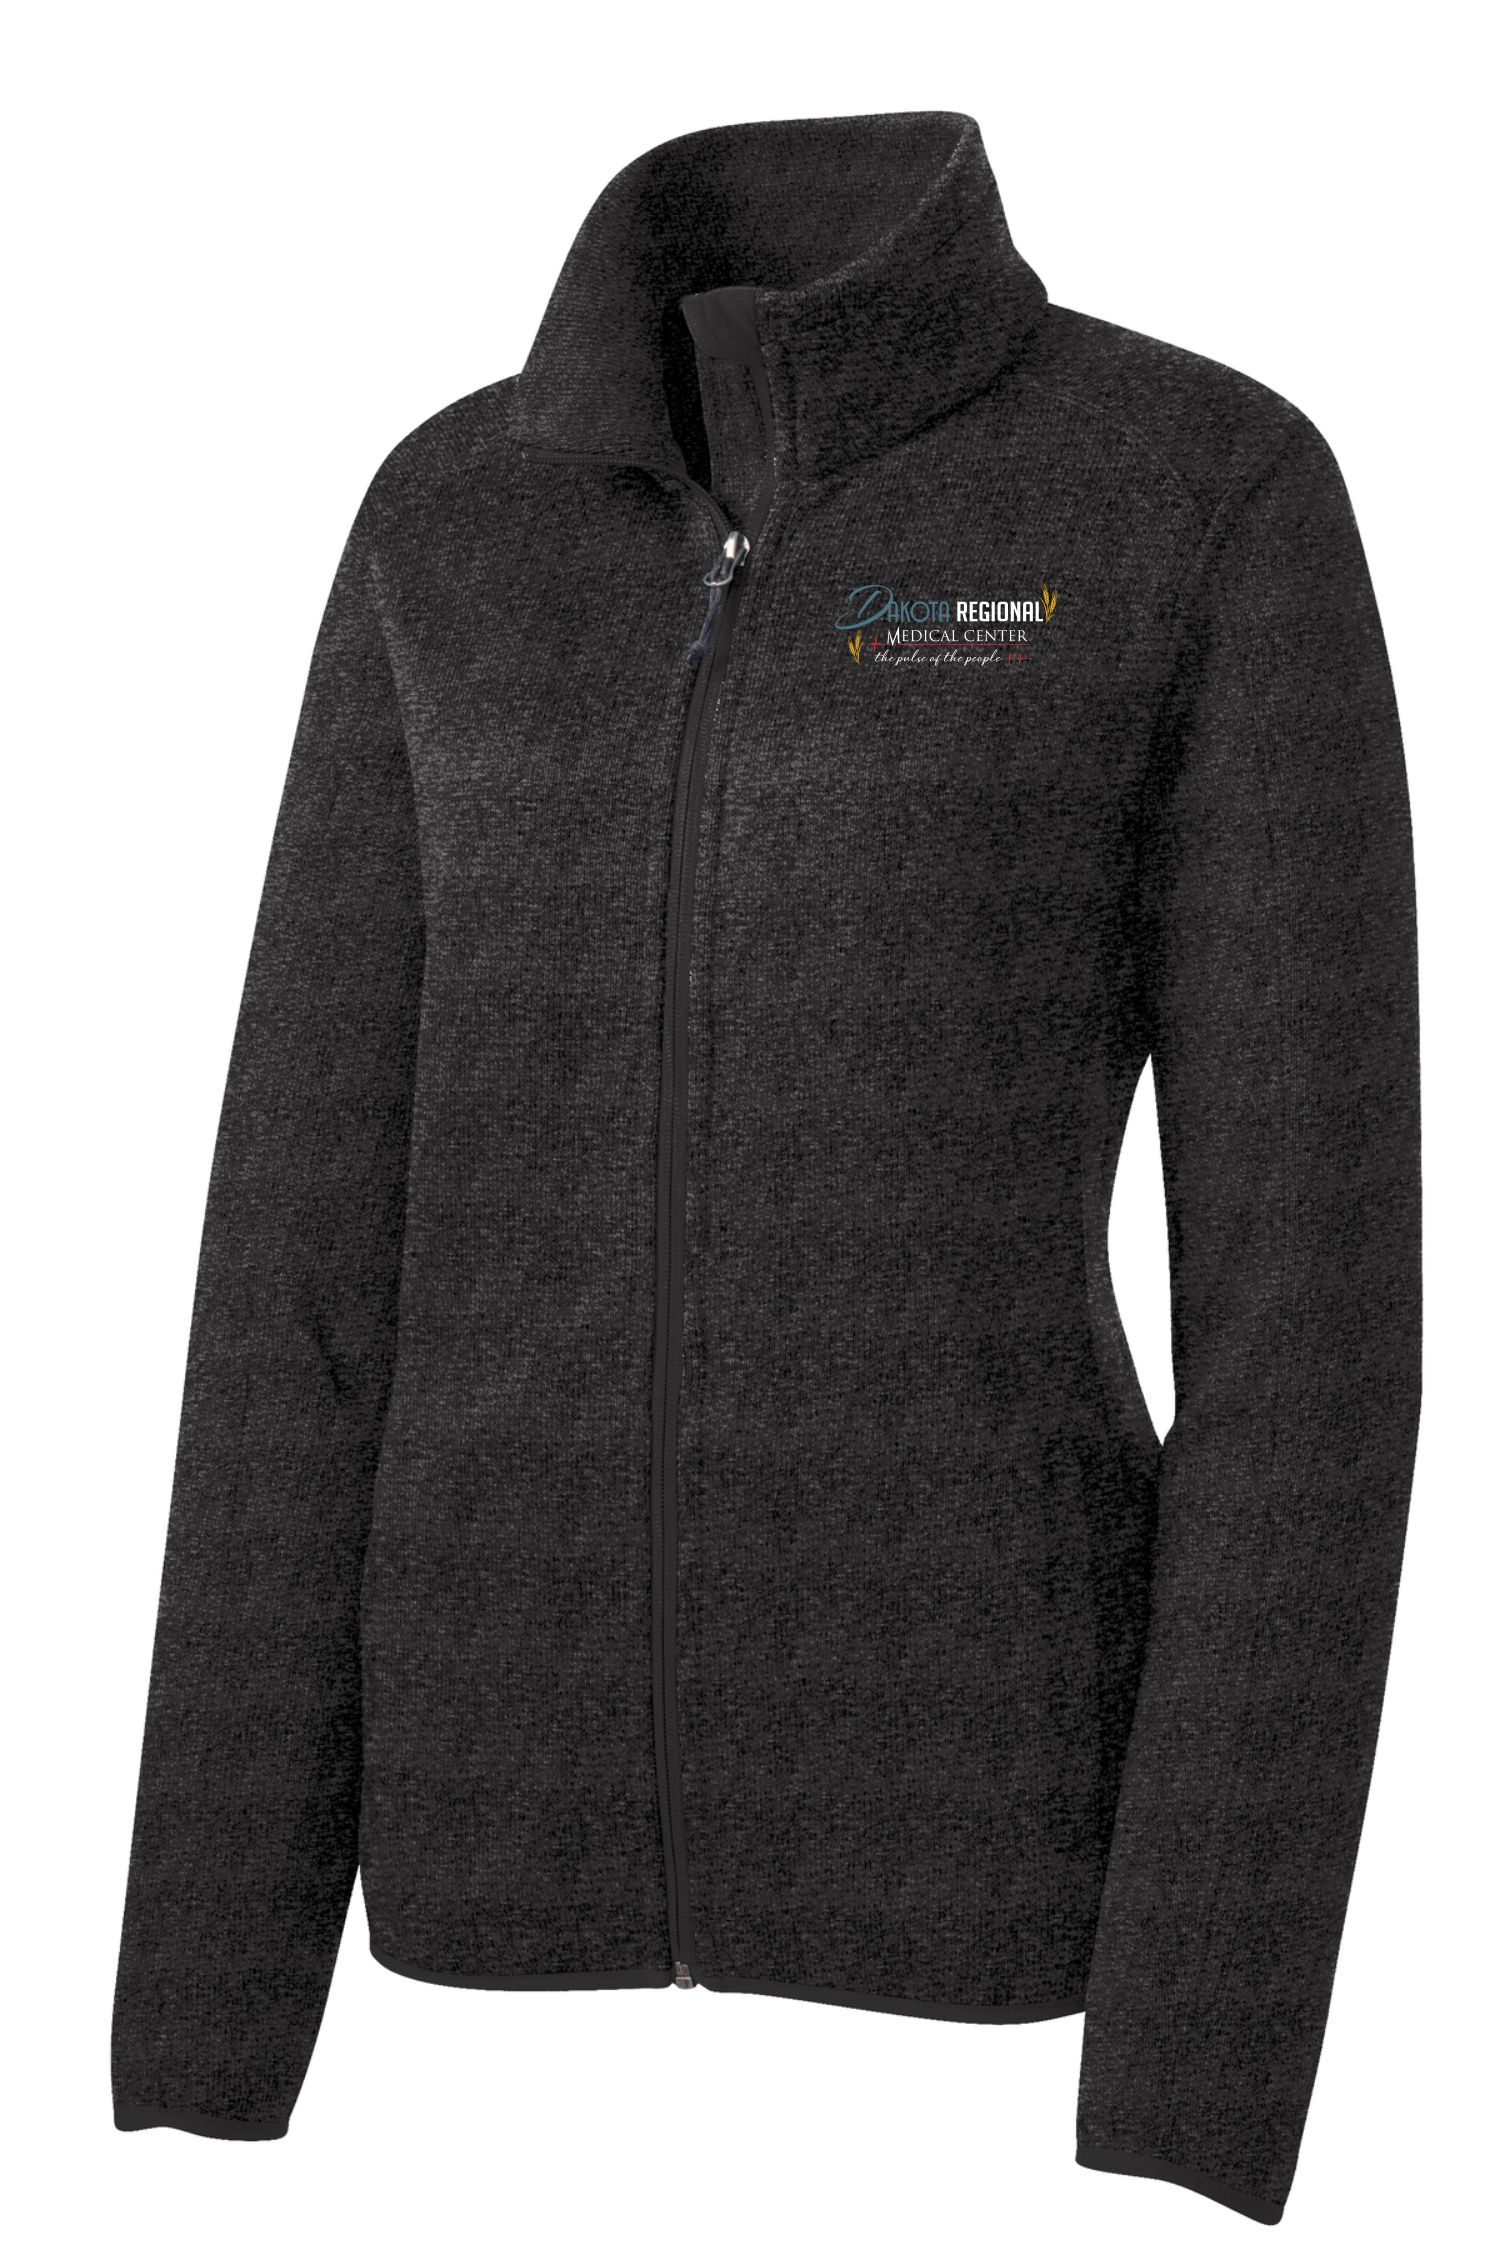 DRMC L232 Port Authority Ladies Sweater Fleece Jacket (Black Heather) -  Orriginals